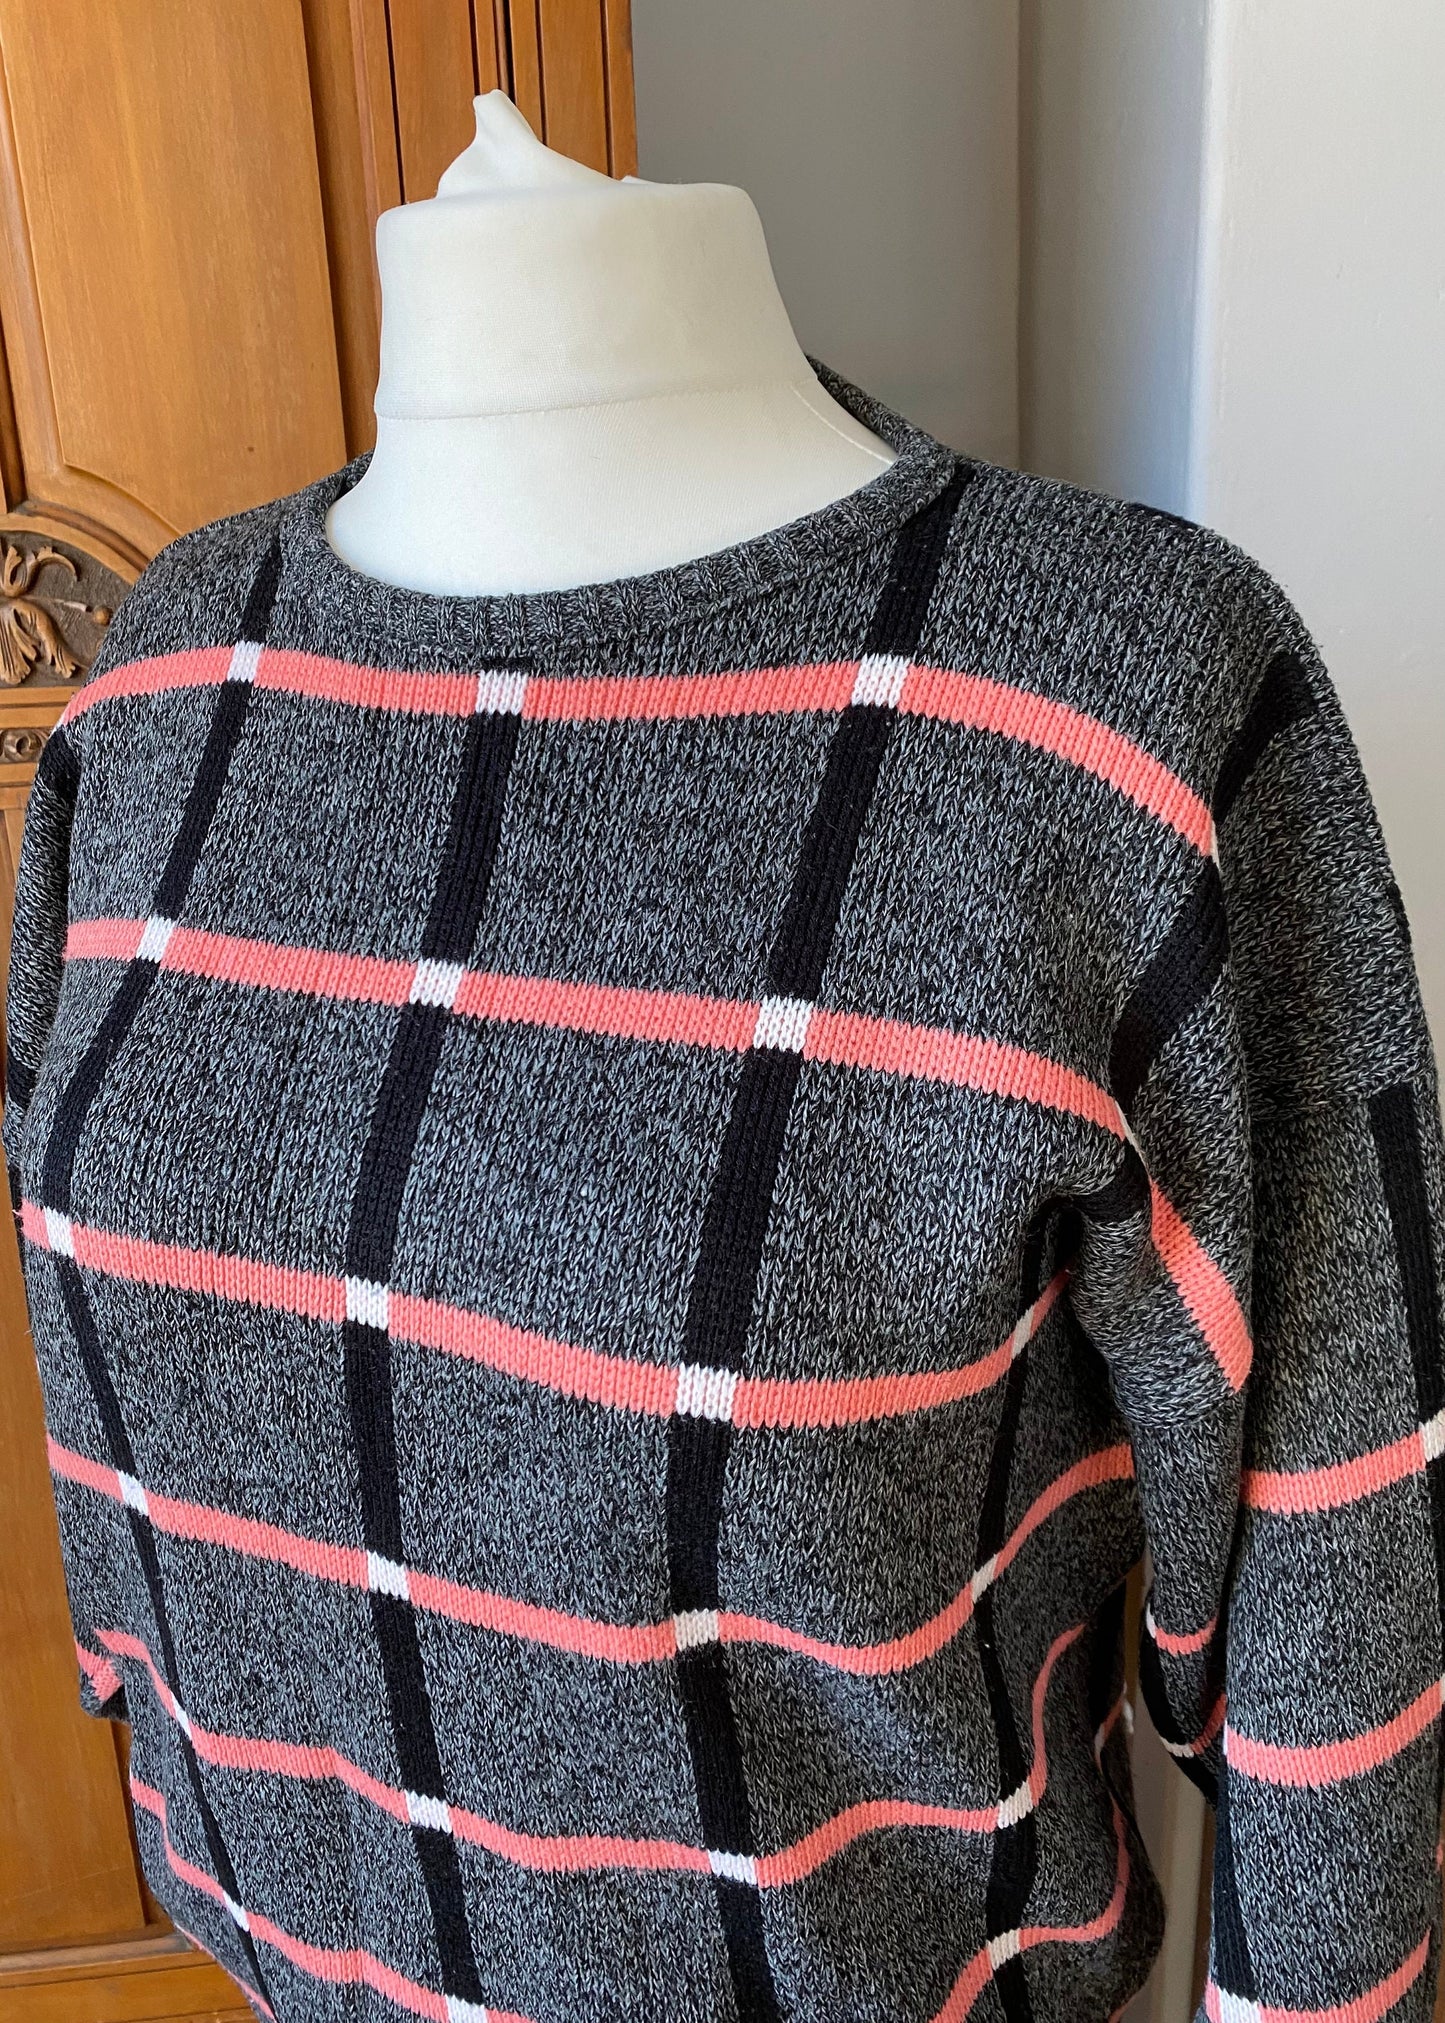 80s grey, pink, white and black geometric print jumper. Approx UK size 16-22 (w) L - XXL (m)